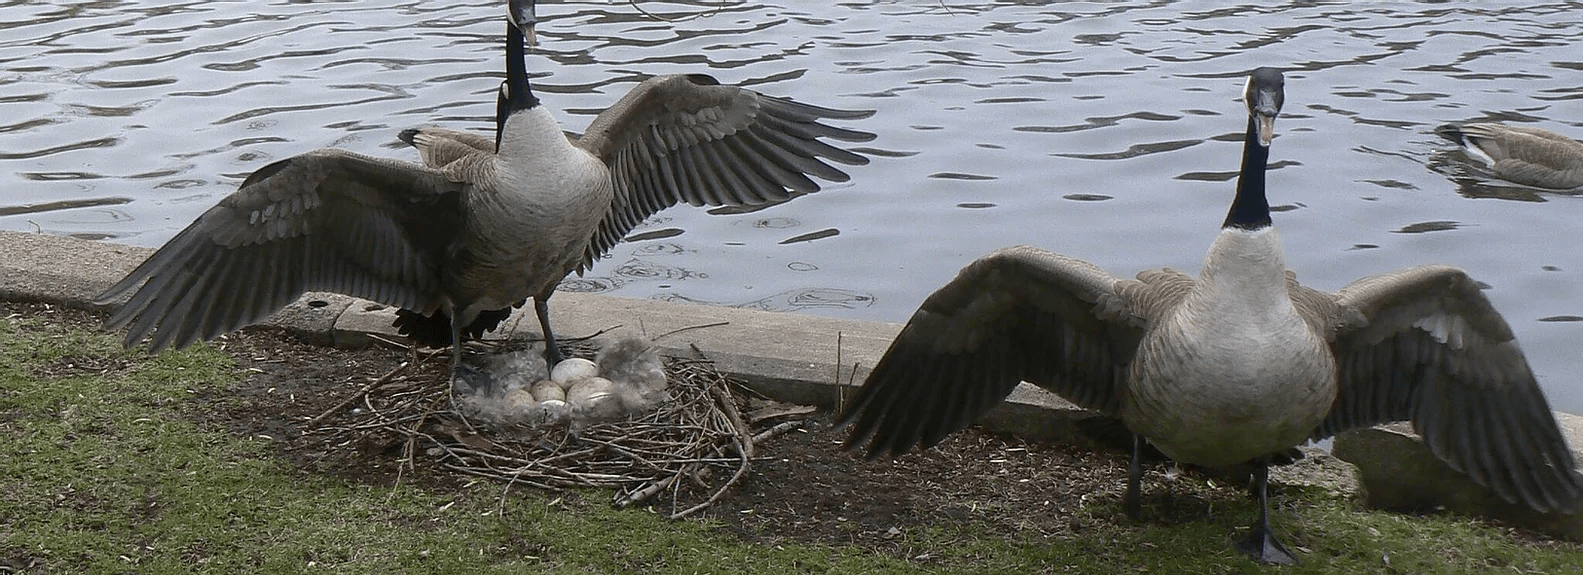 Geese Removal Dog Service, Egg Depredation & Nest Management